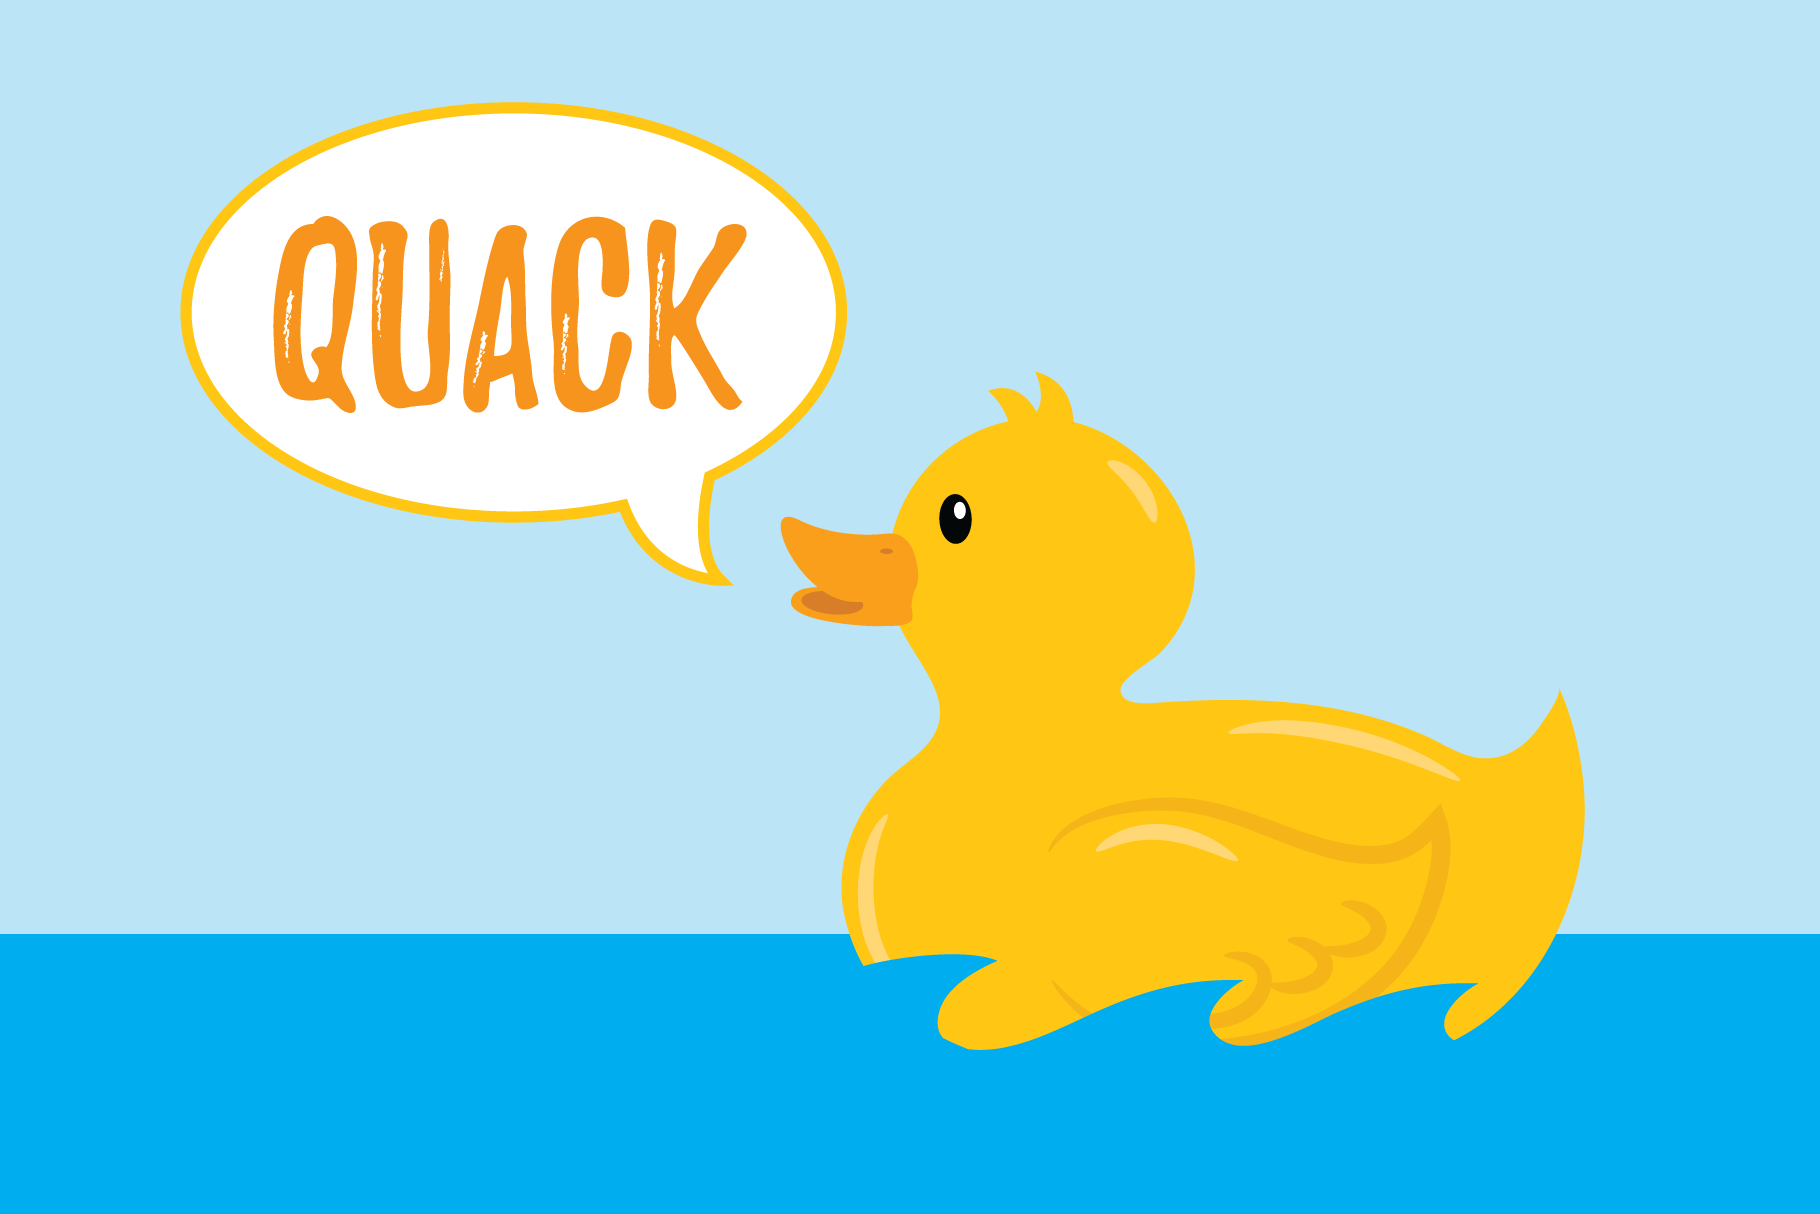 duck quacking clipart